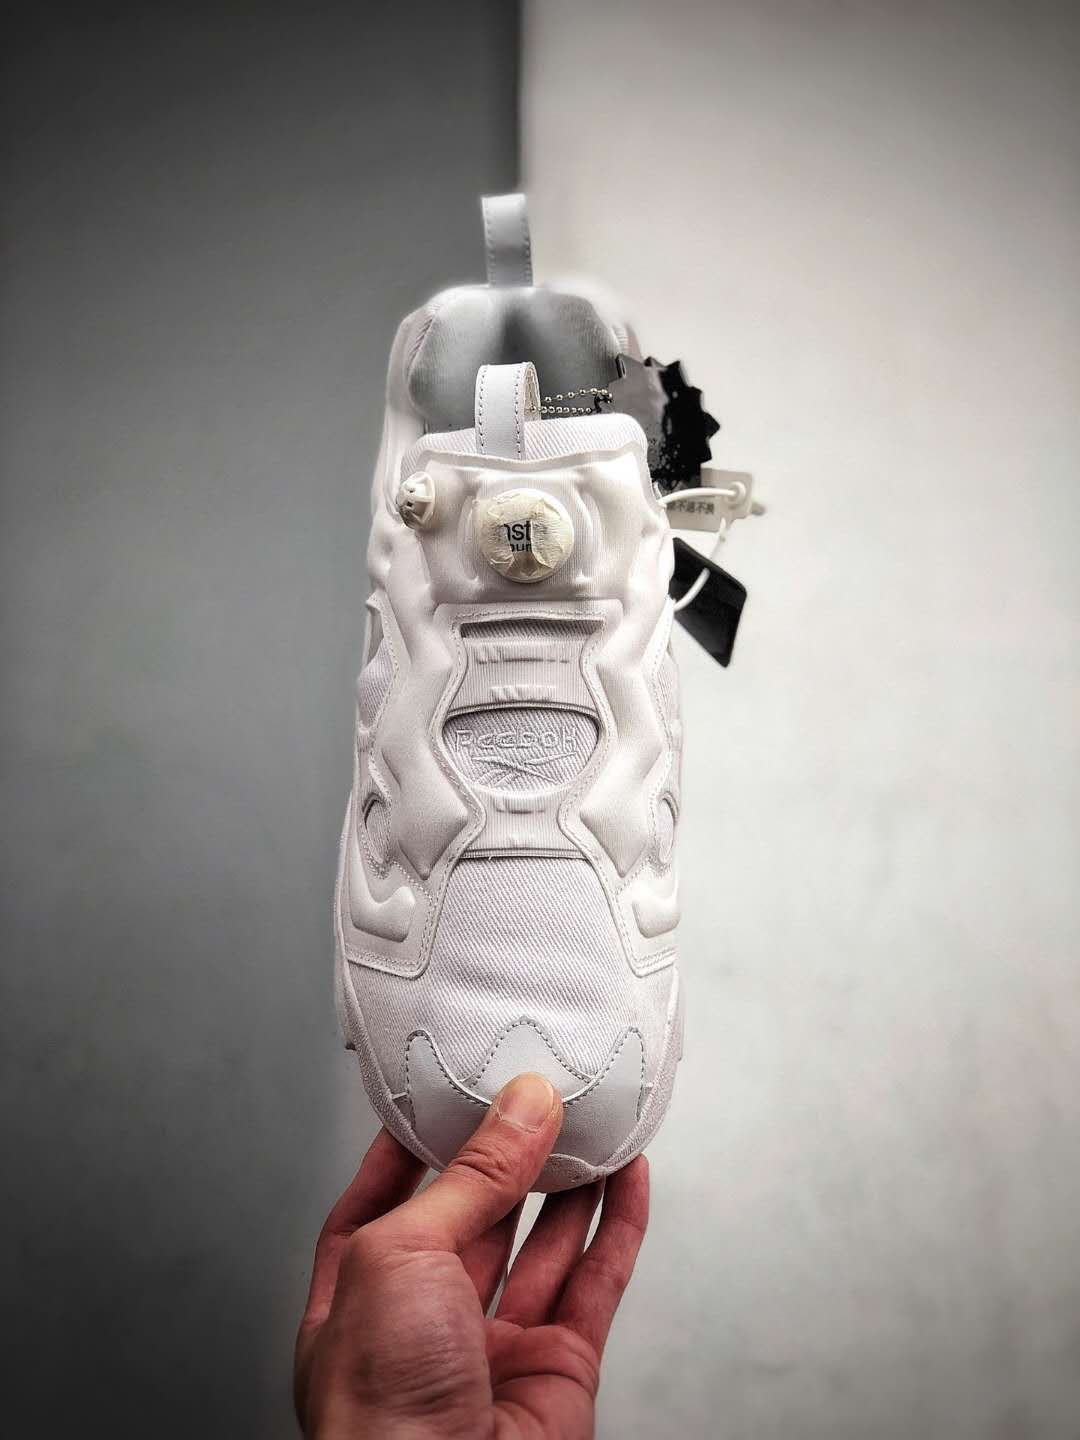 Reebok Atmos x InstaPump Fury OG 'White' V63458 - Classic Style for Sneakerheads